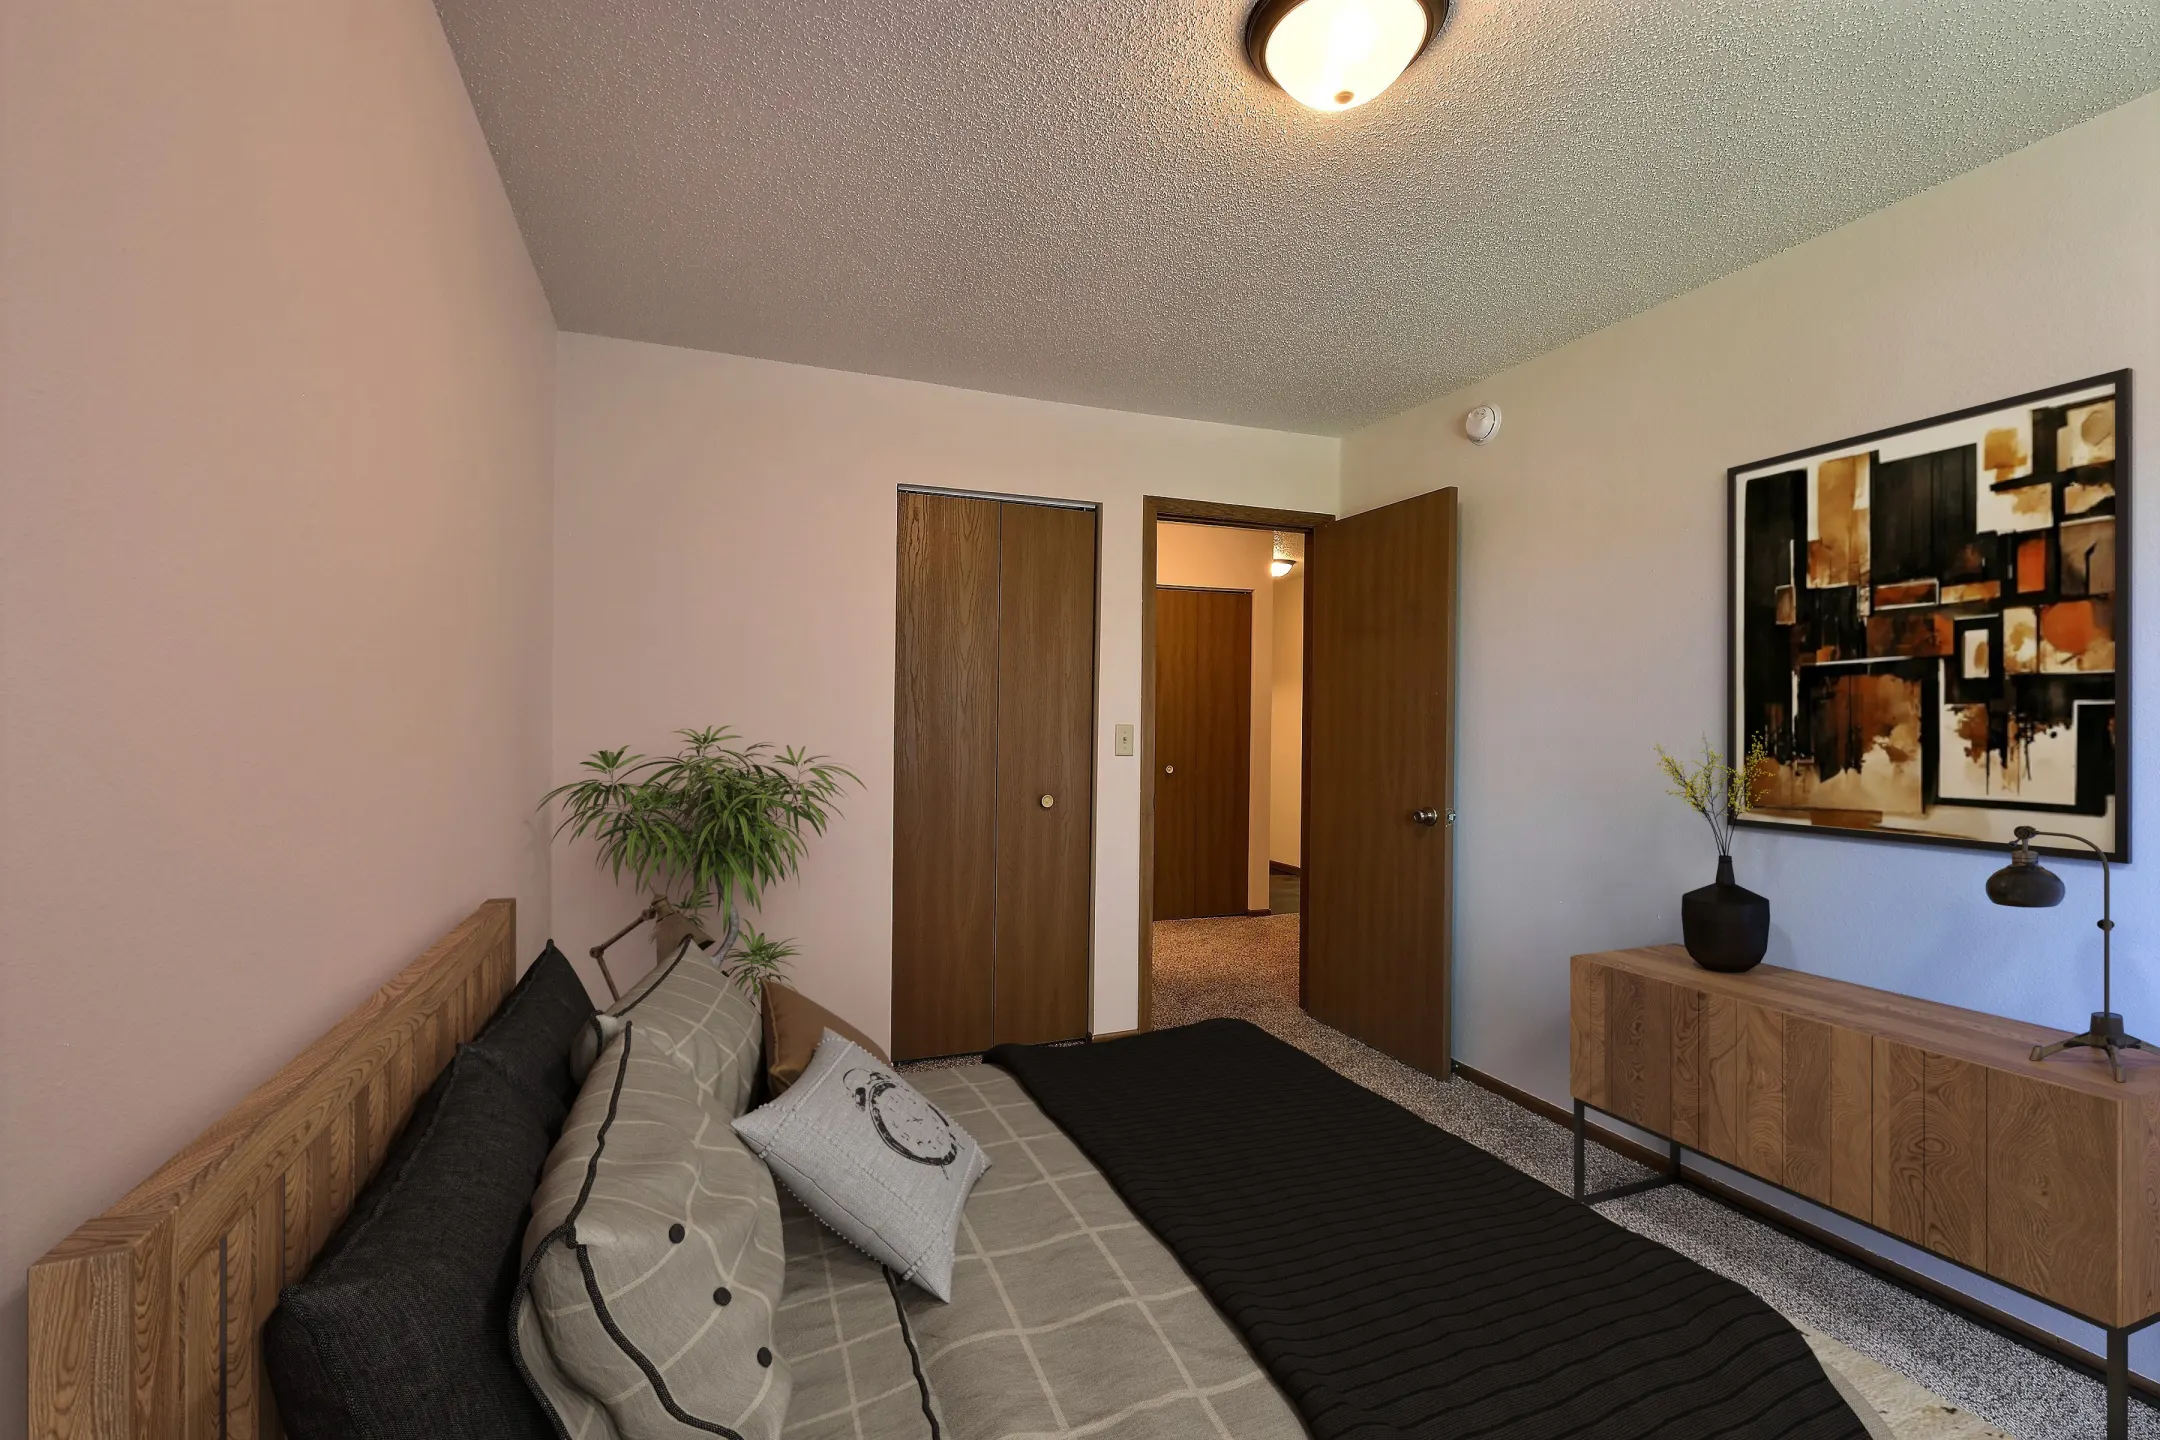 Living Room - Chestnut Ridge Apartments - Fargo, ND